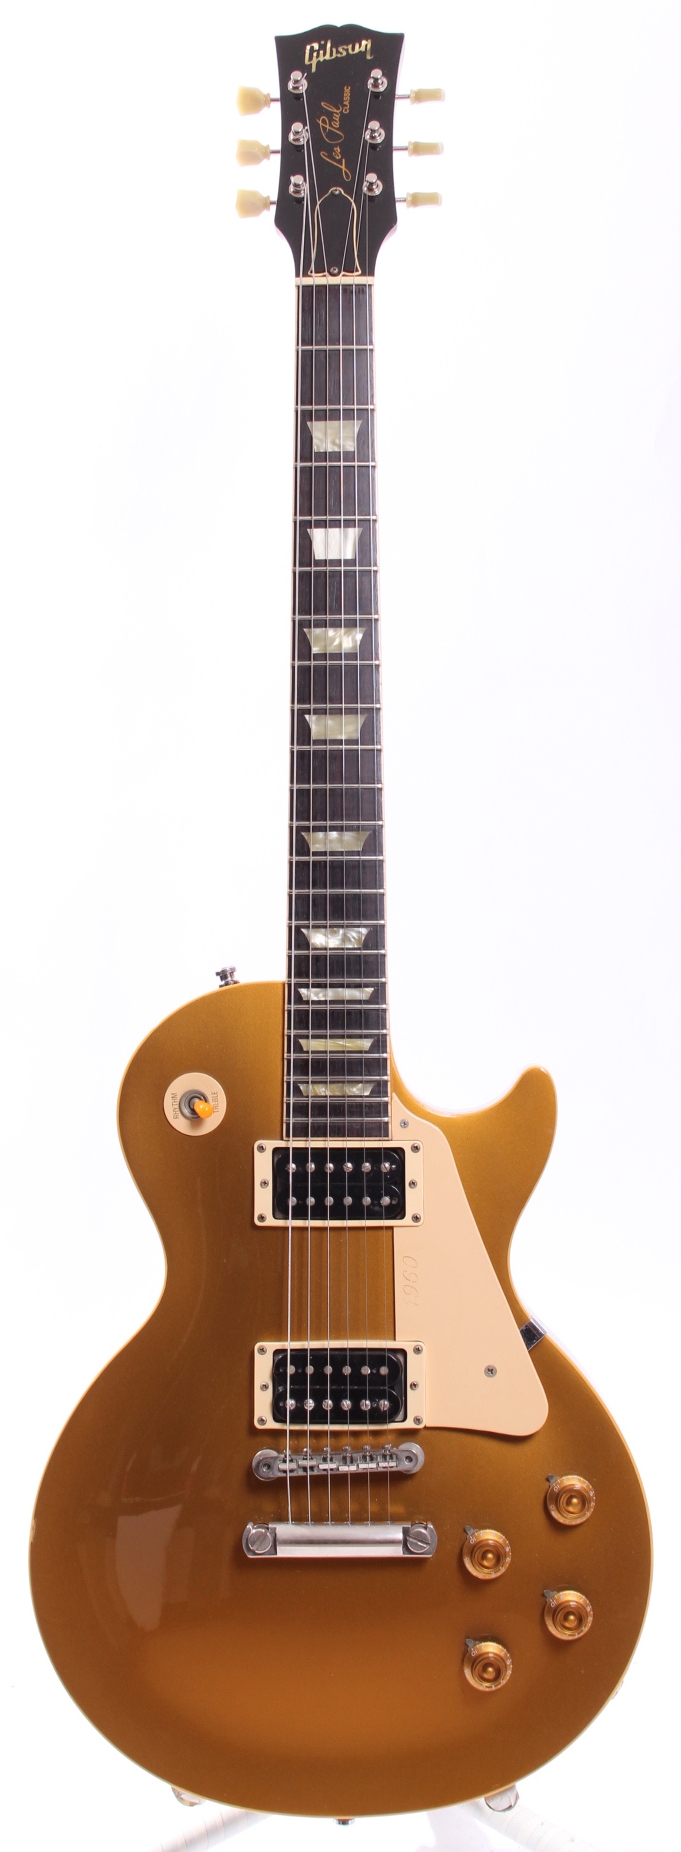 Gibson Les Paul Classic 1993 Goldtop Guitar For Sale Yeahman's Guitars